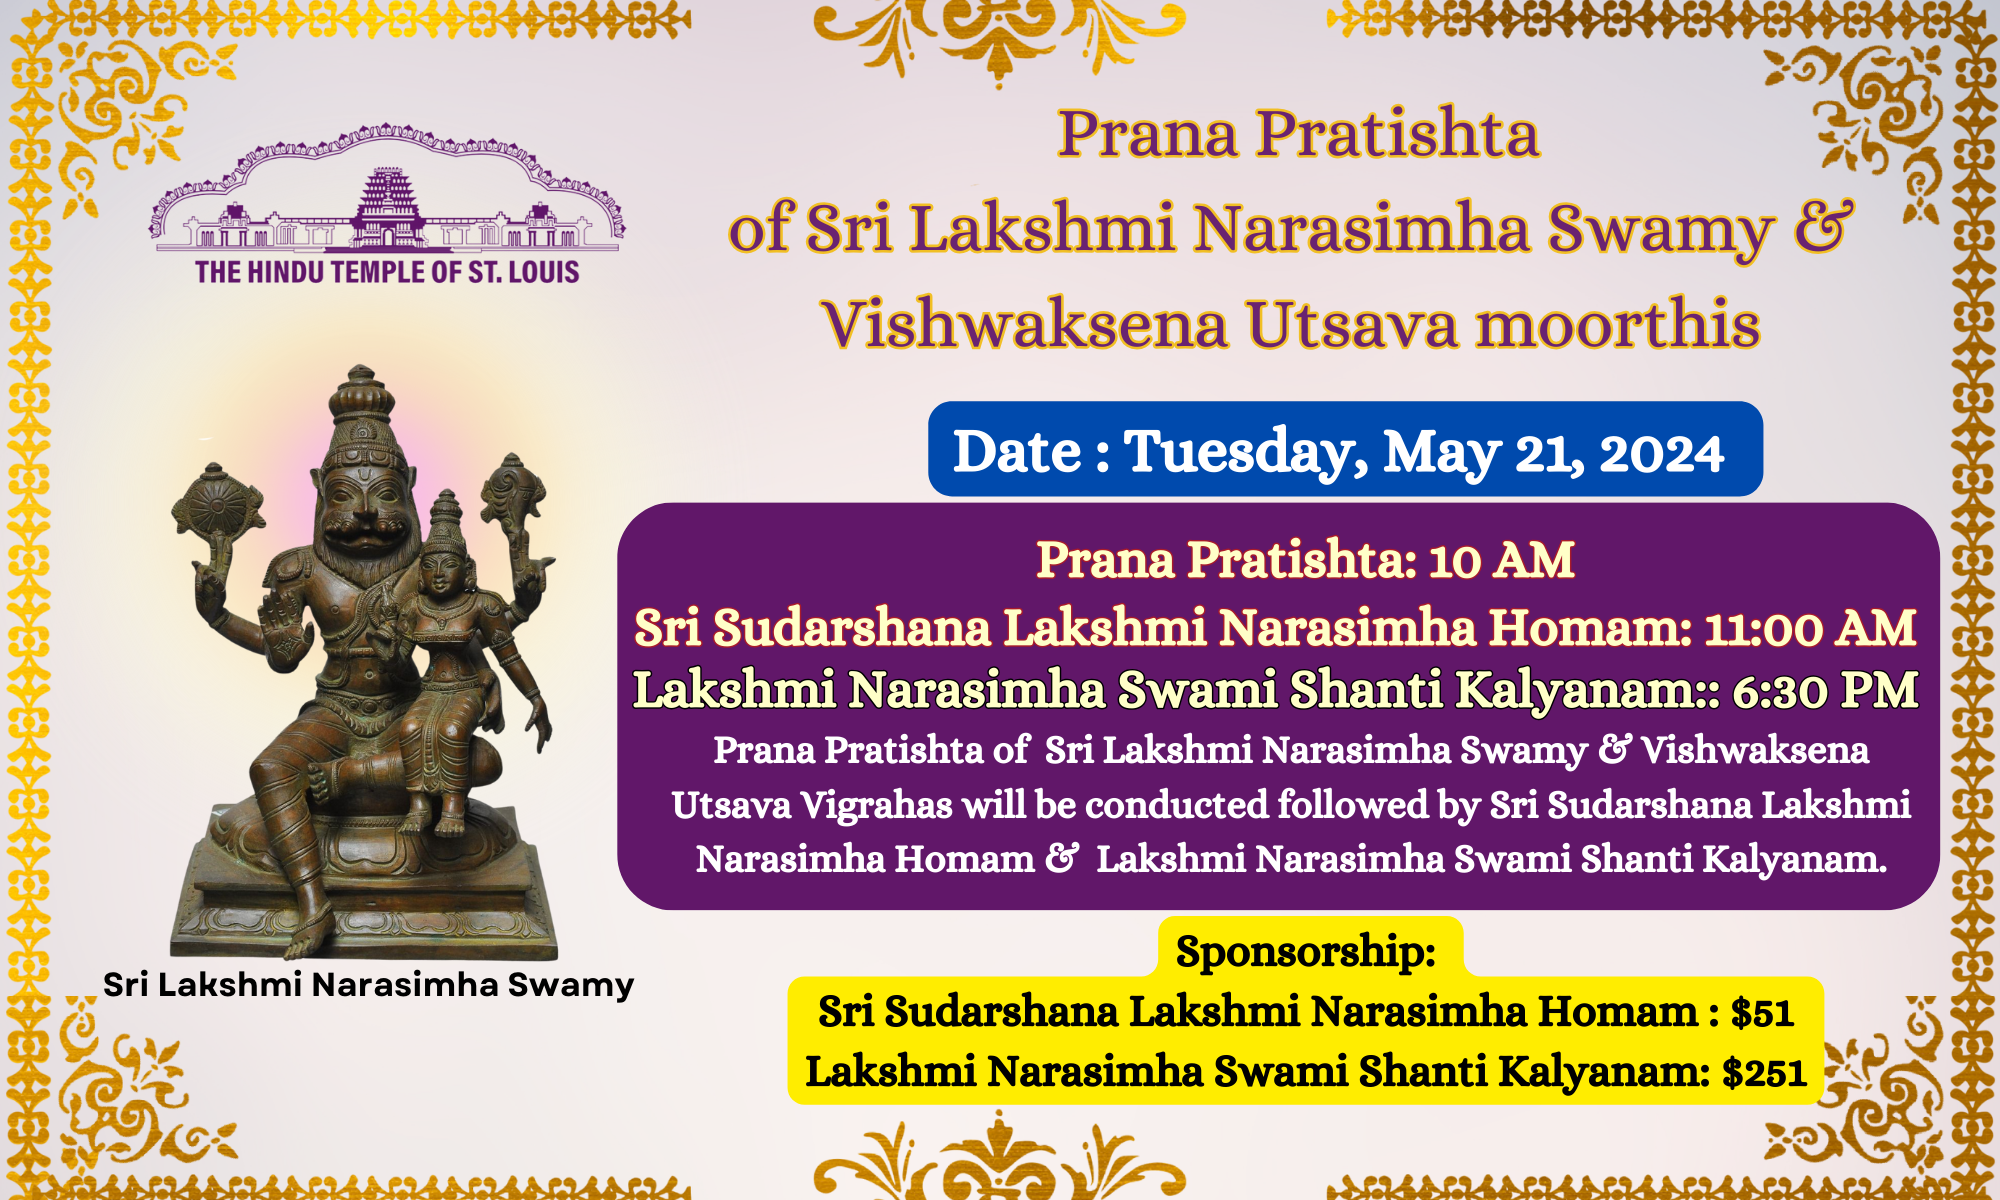 Prana Pratishta-Homam-Kalyanam @ May 21, Tuesday, 10AM